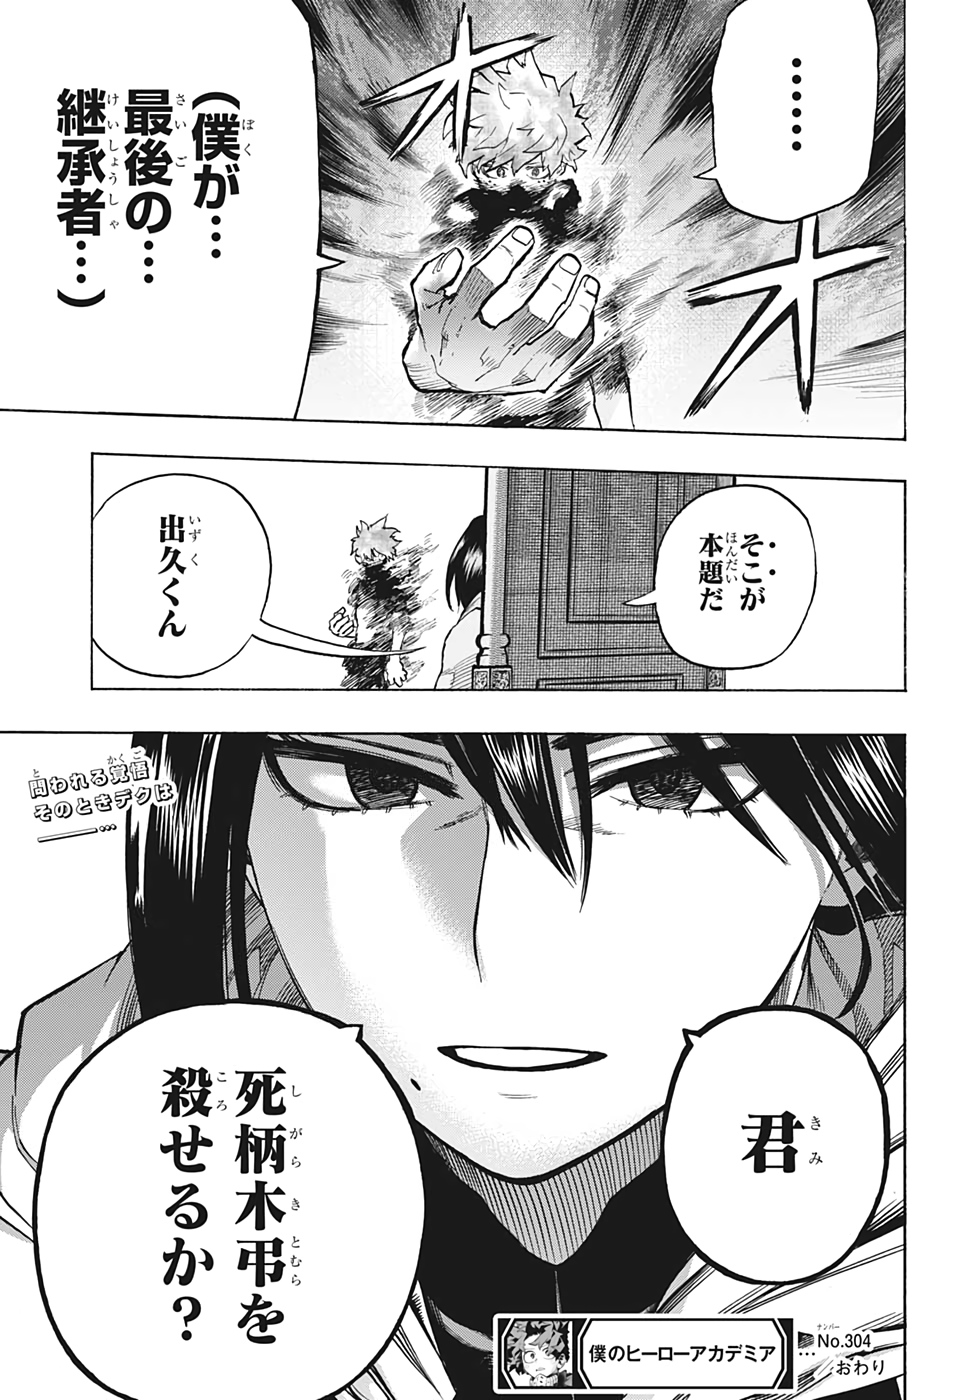 Boku no Hero Academia - Chapter 304 - Page 17